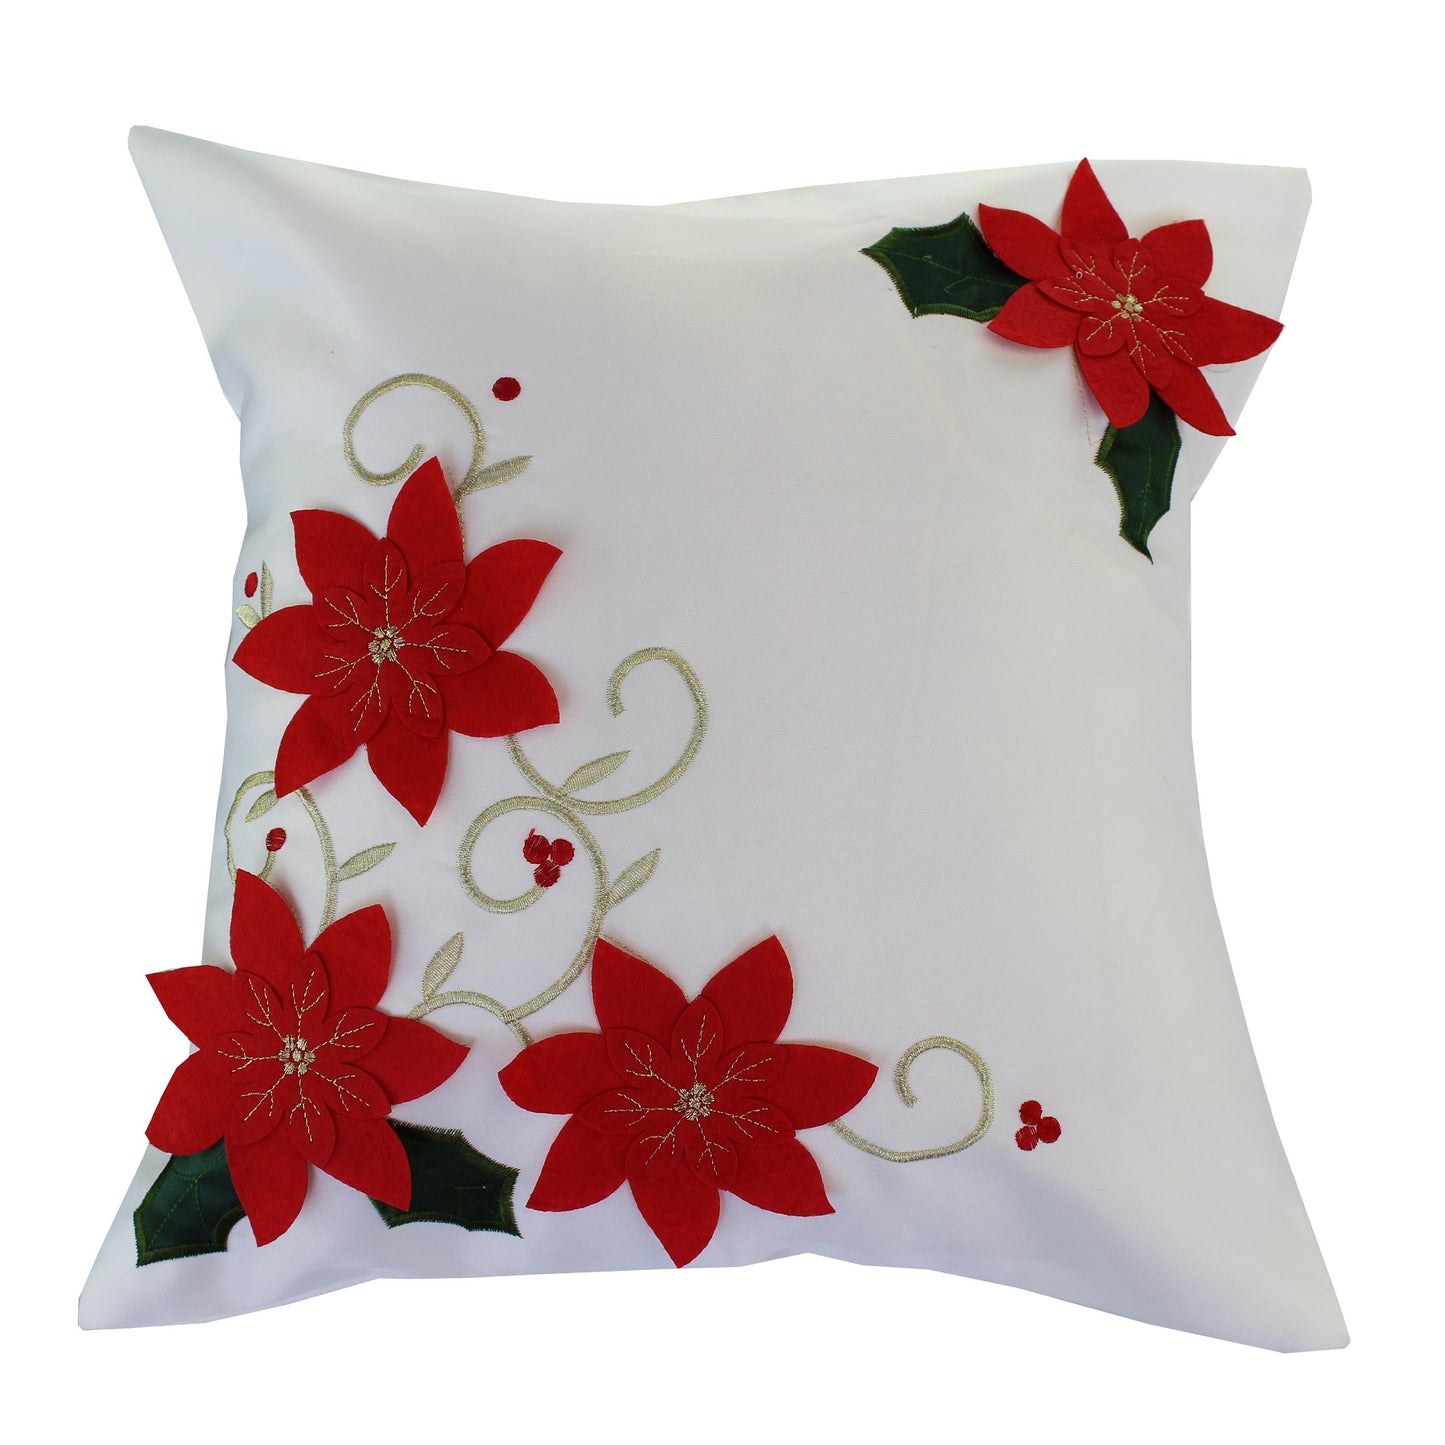 Christmas Poinsettias Decorative Throw Pillow Covers